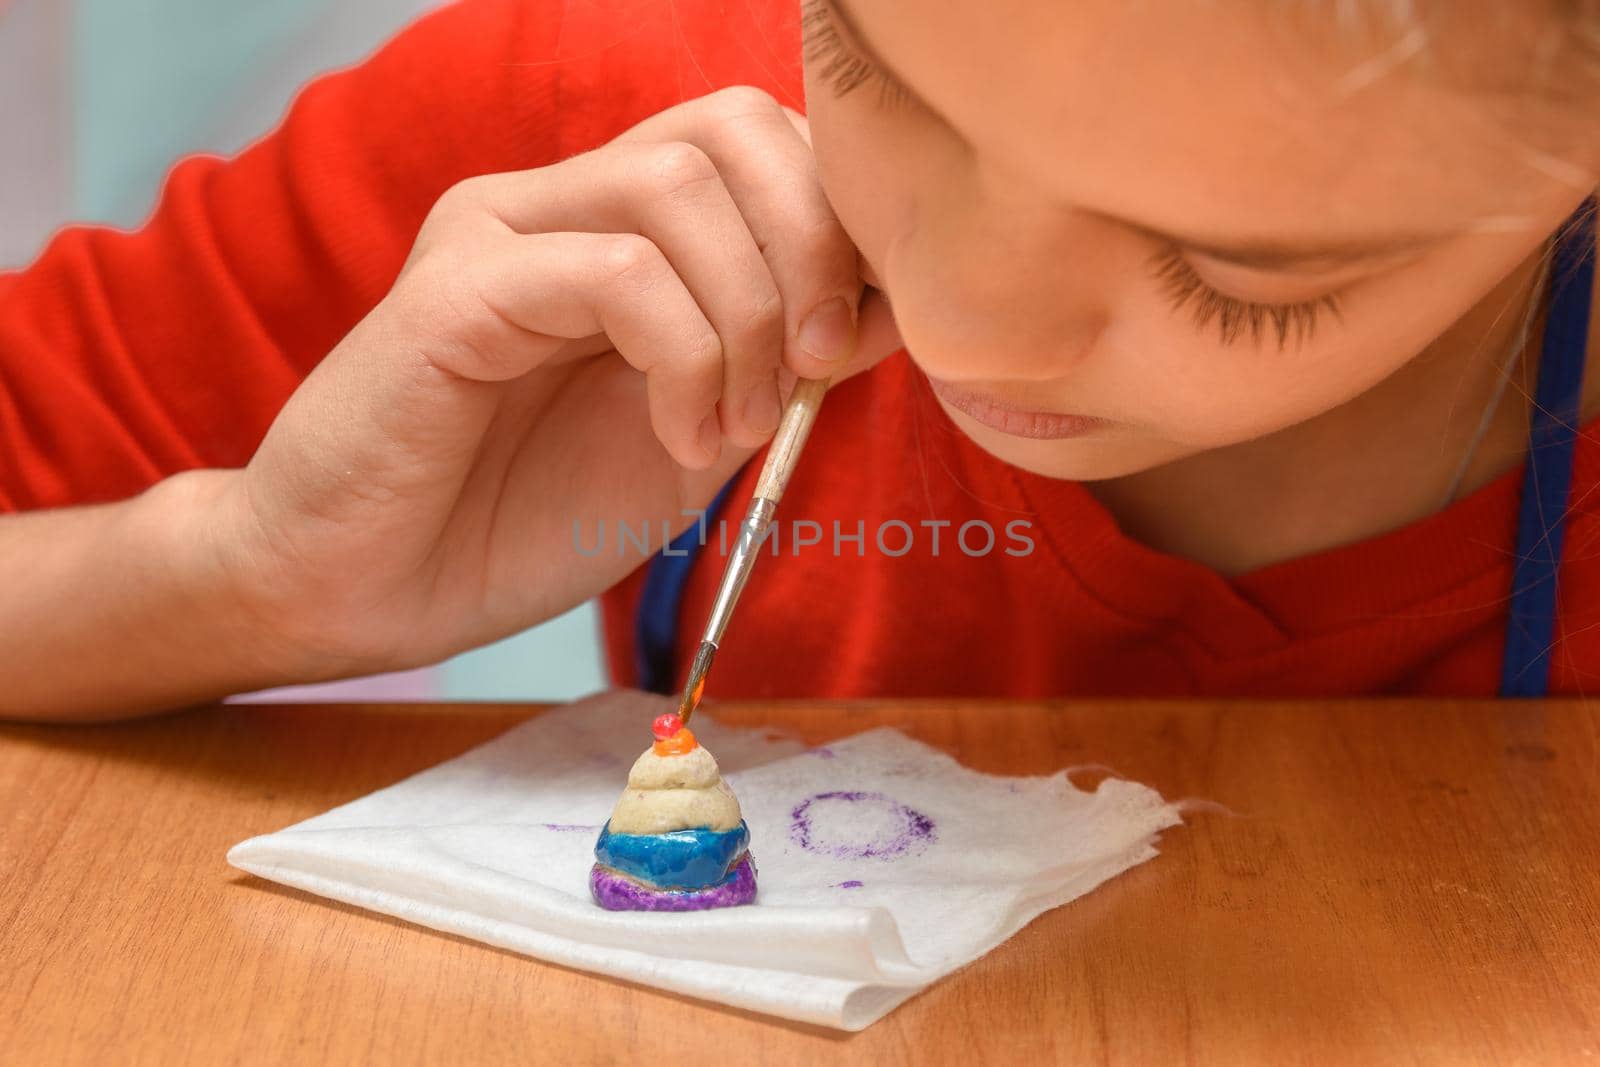 A girl carefully paints a figurine made of salt dough, close-up